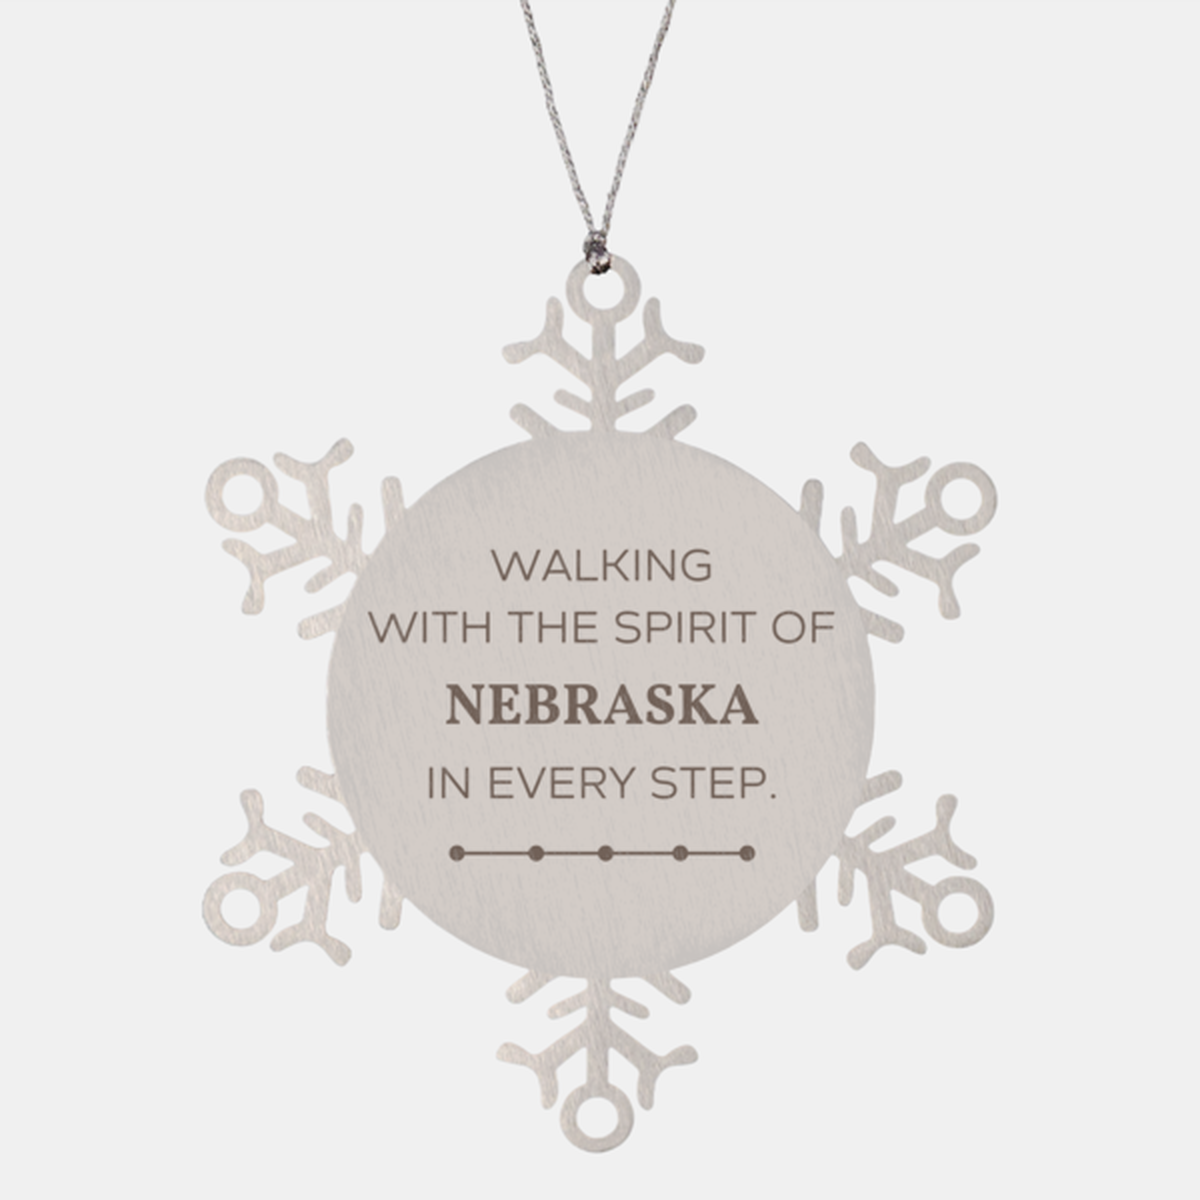 Nebraska Gifts, Walking with the spirit, Love Nebraska Birthday Christmas Snowflake Ornament For Nebraska People, Men, Women, Friends